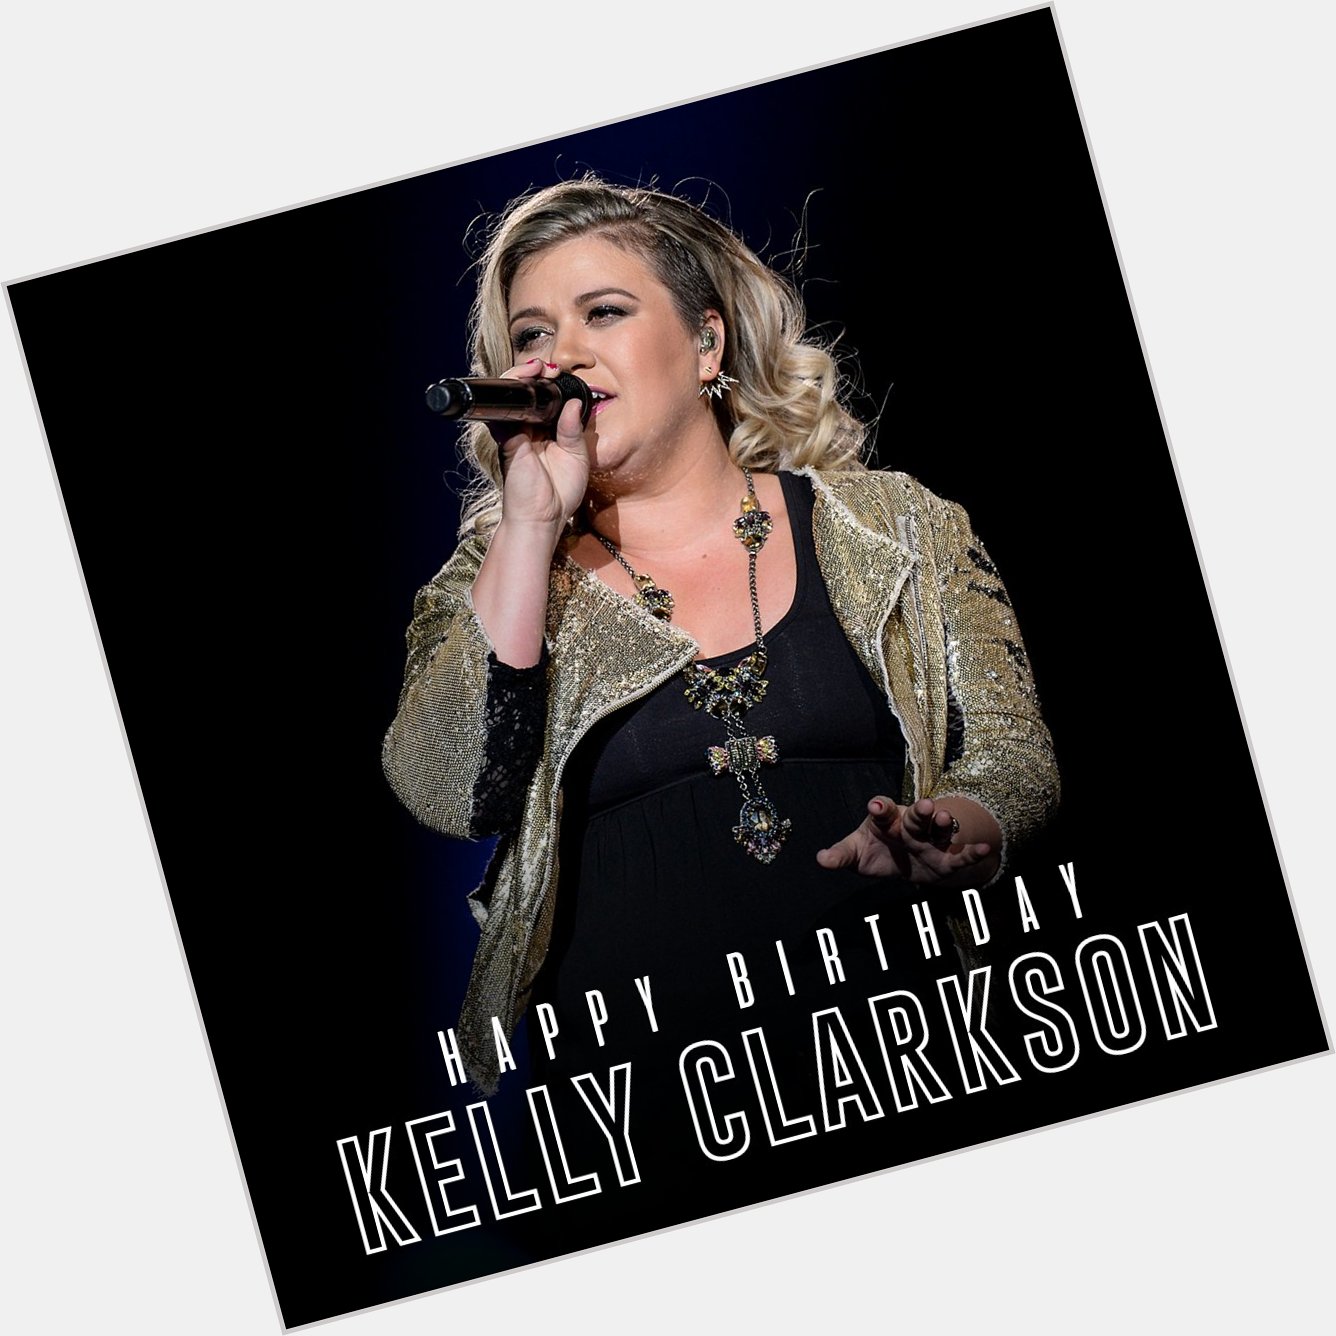 Happy Birthday to the amazing Kelly Clarkson! 